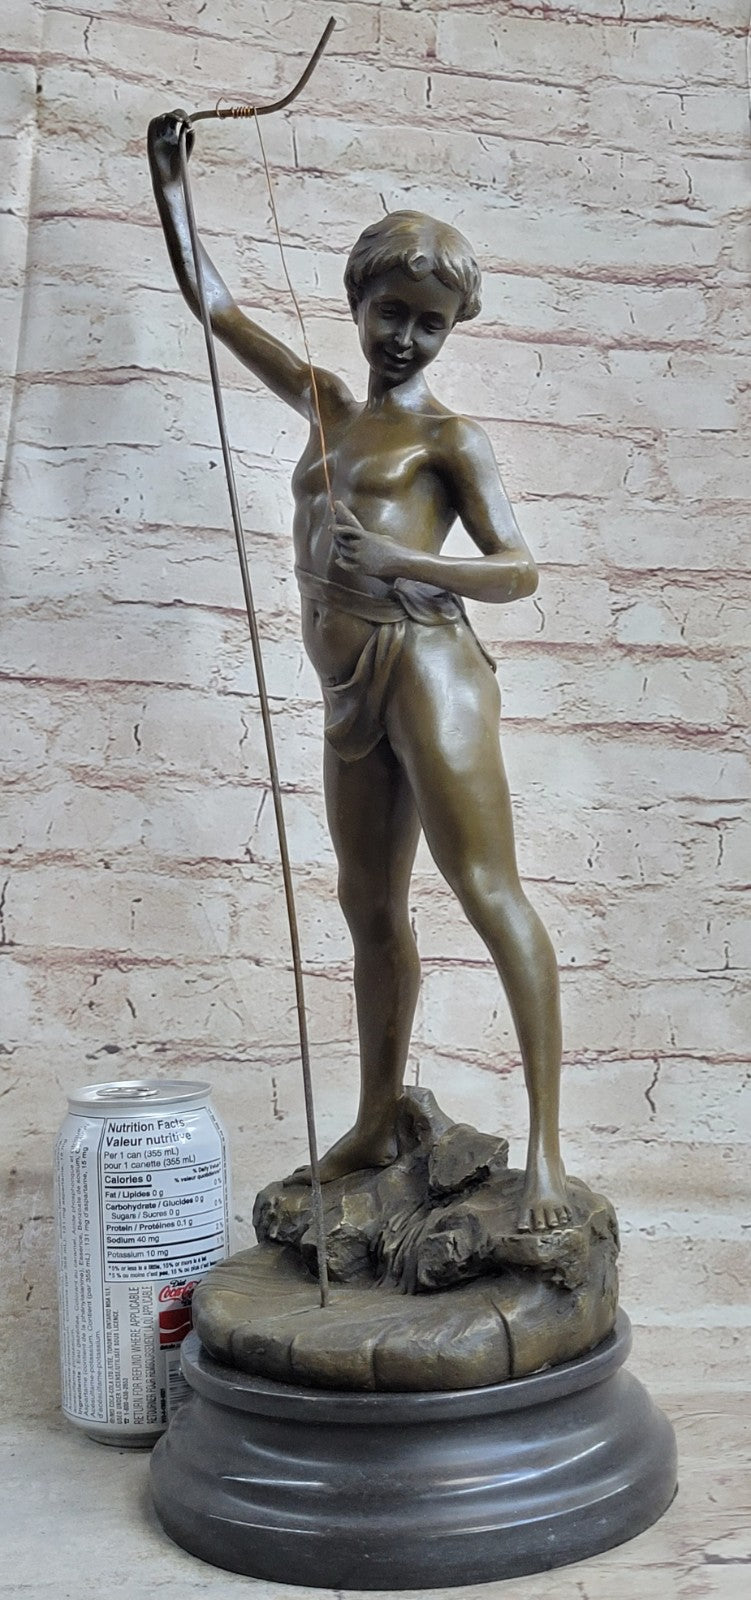 Signed Original Artwork by American Artist Art Taylor Bronze Sculpture Statue